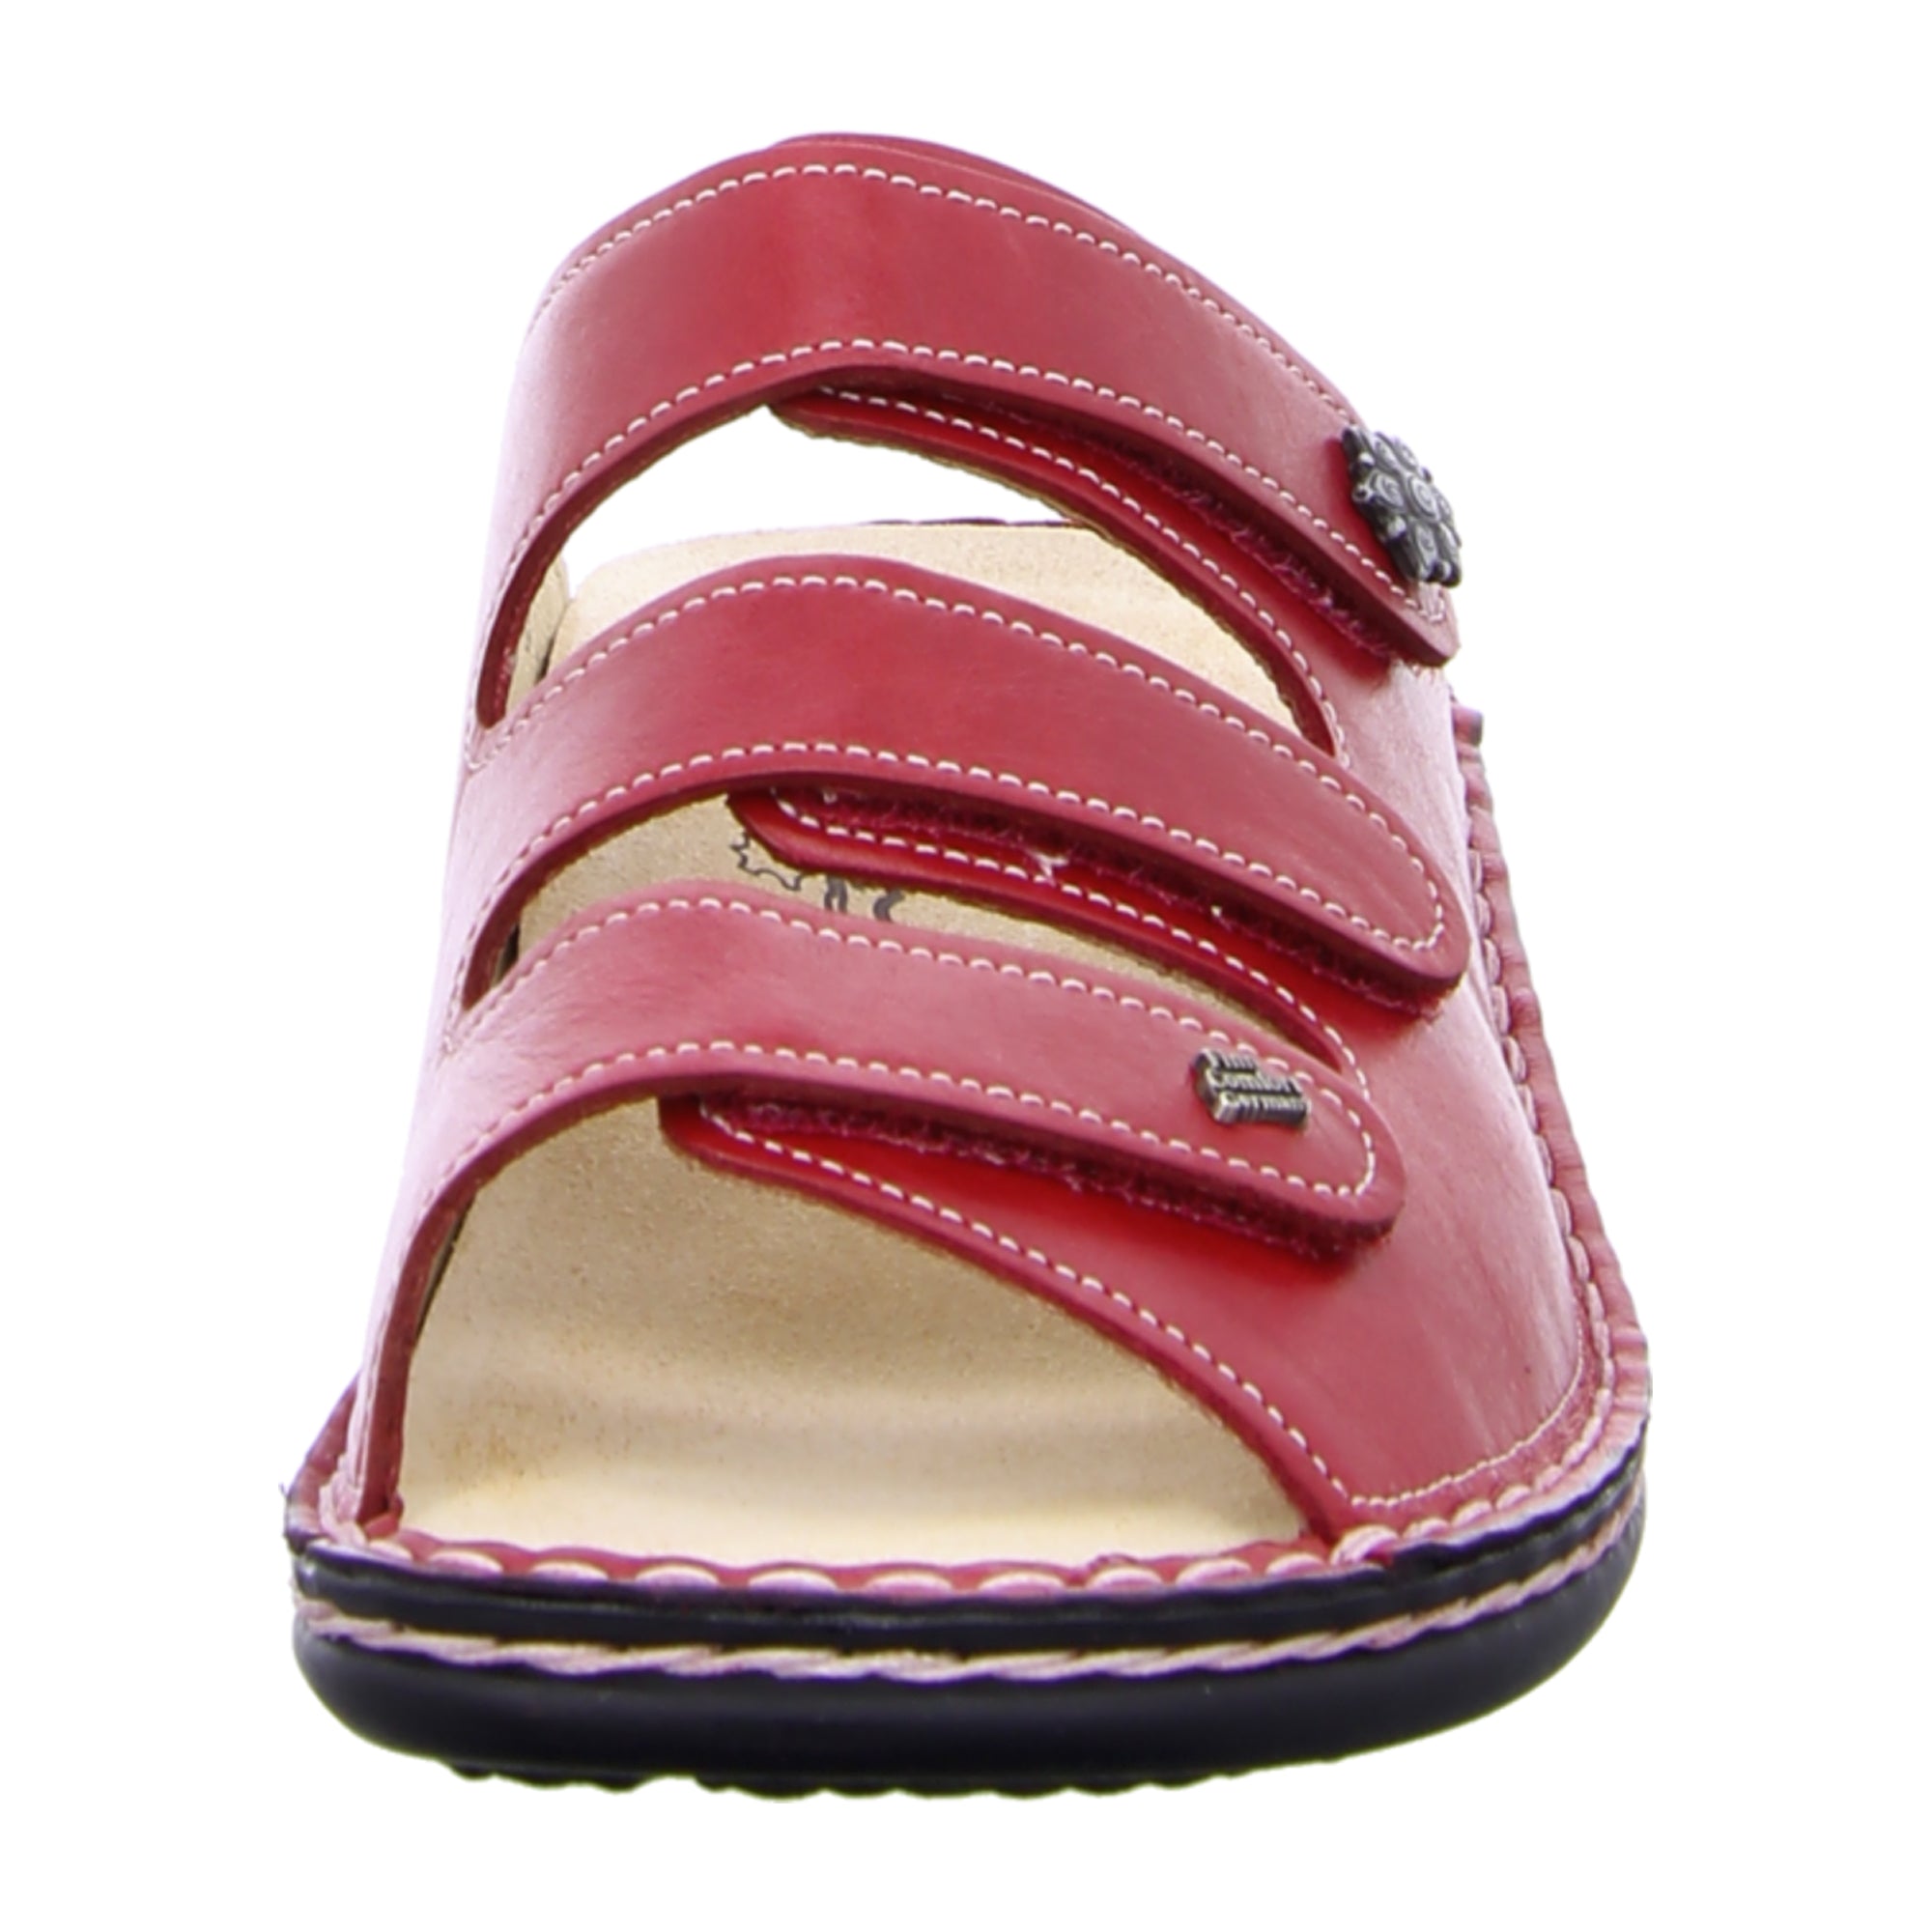 Finn Comfort Menorca S Red Sandals for Women - Stylish & Comfortable